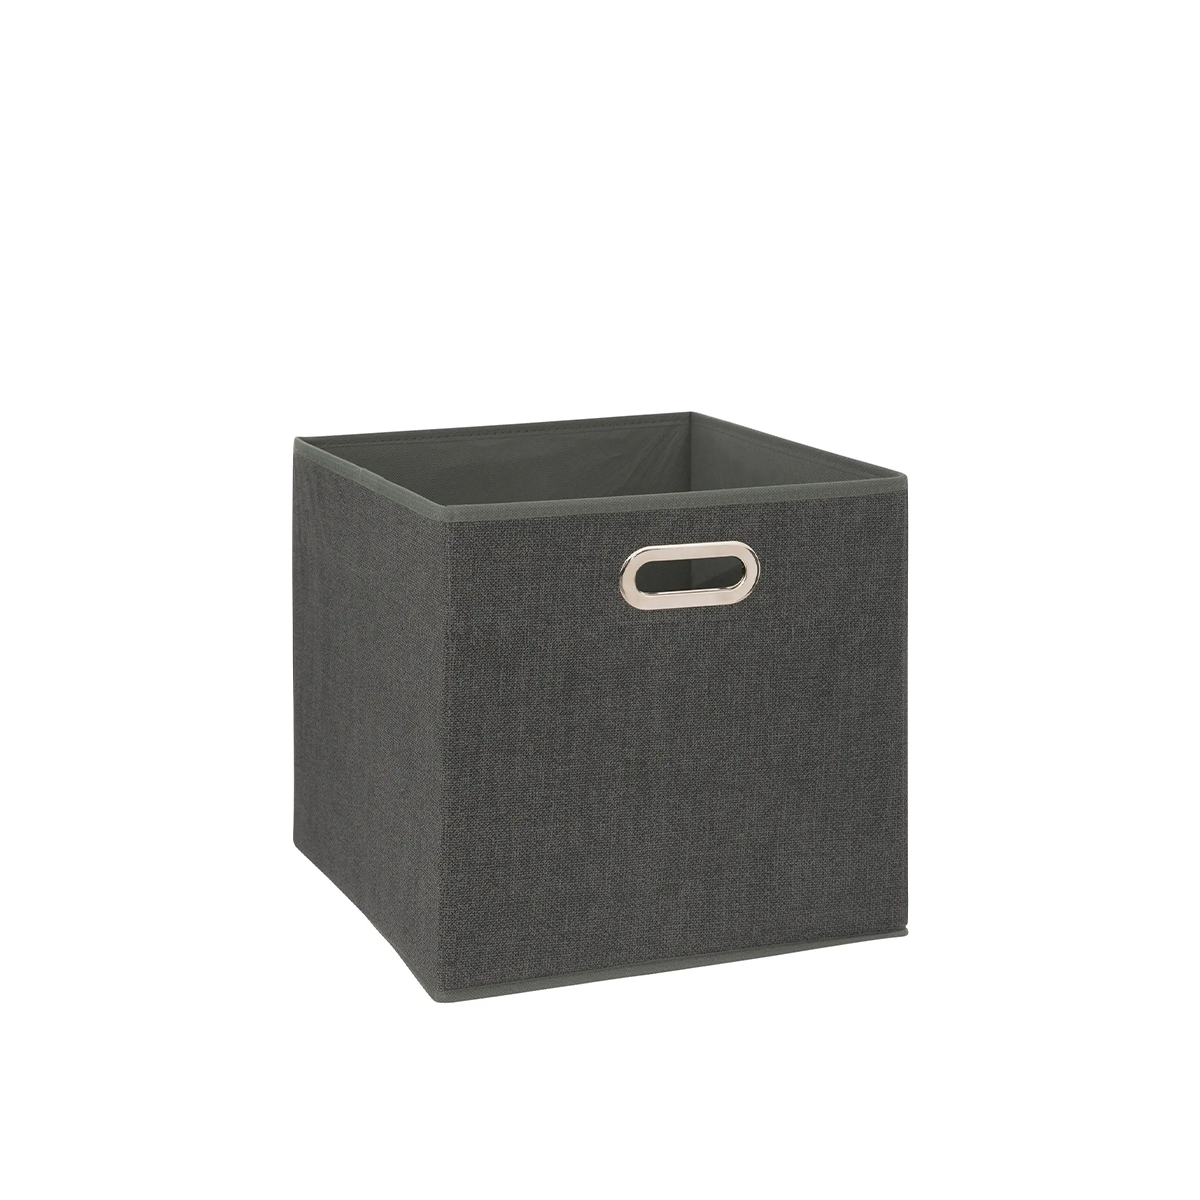 5 Five Simply Smart Storage Box 31×31 CM -  – Online